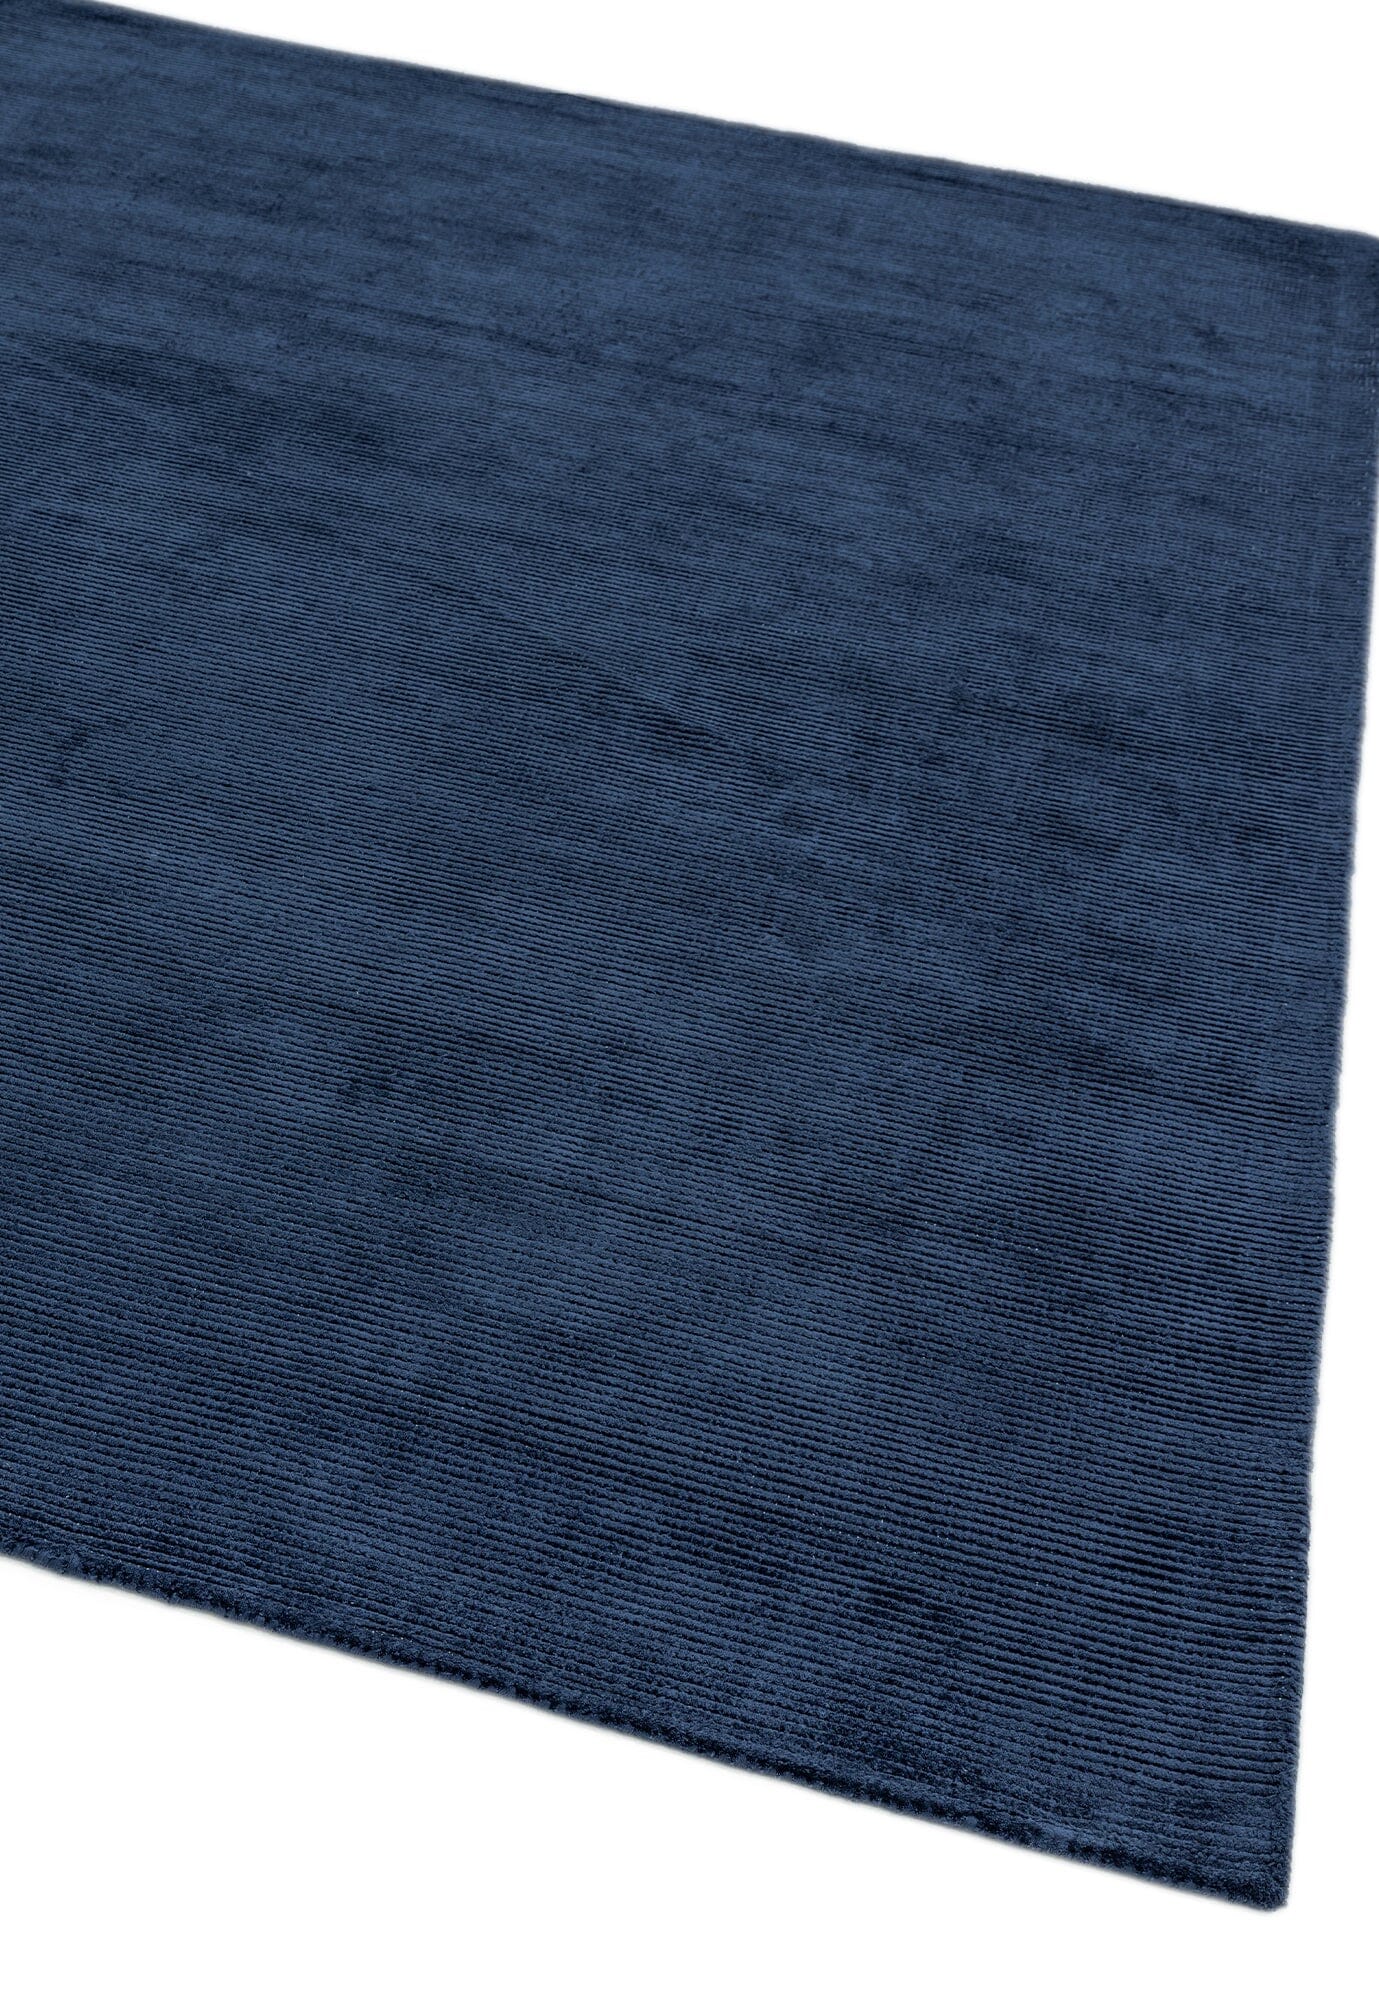  Asiatic Carpets-Asiatic Carpets Reko Hand Woven Rug Navy - 200 x 300cm-Blue 509 